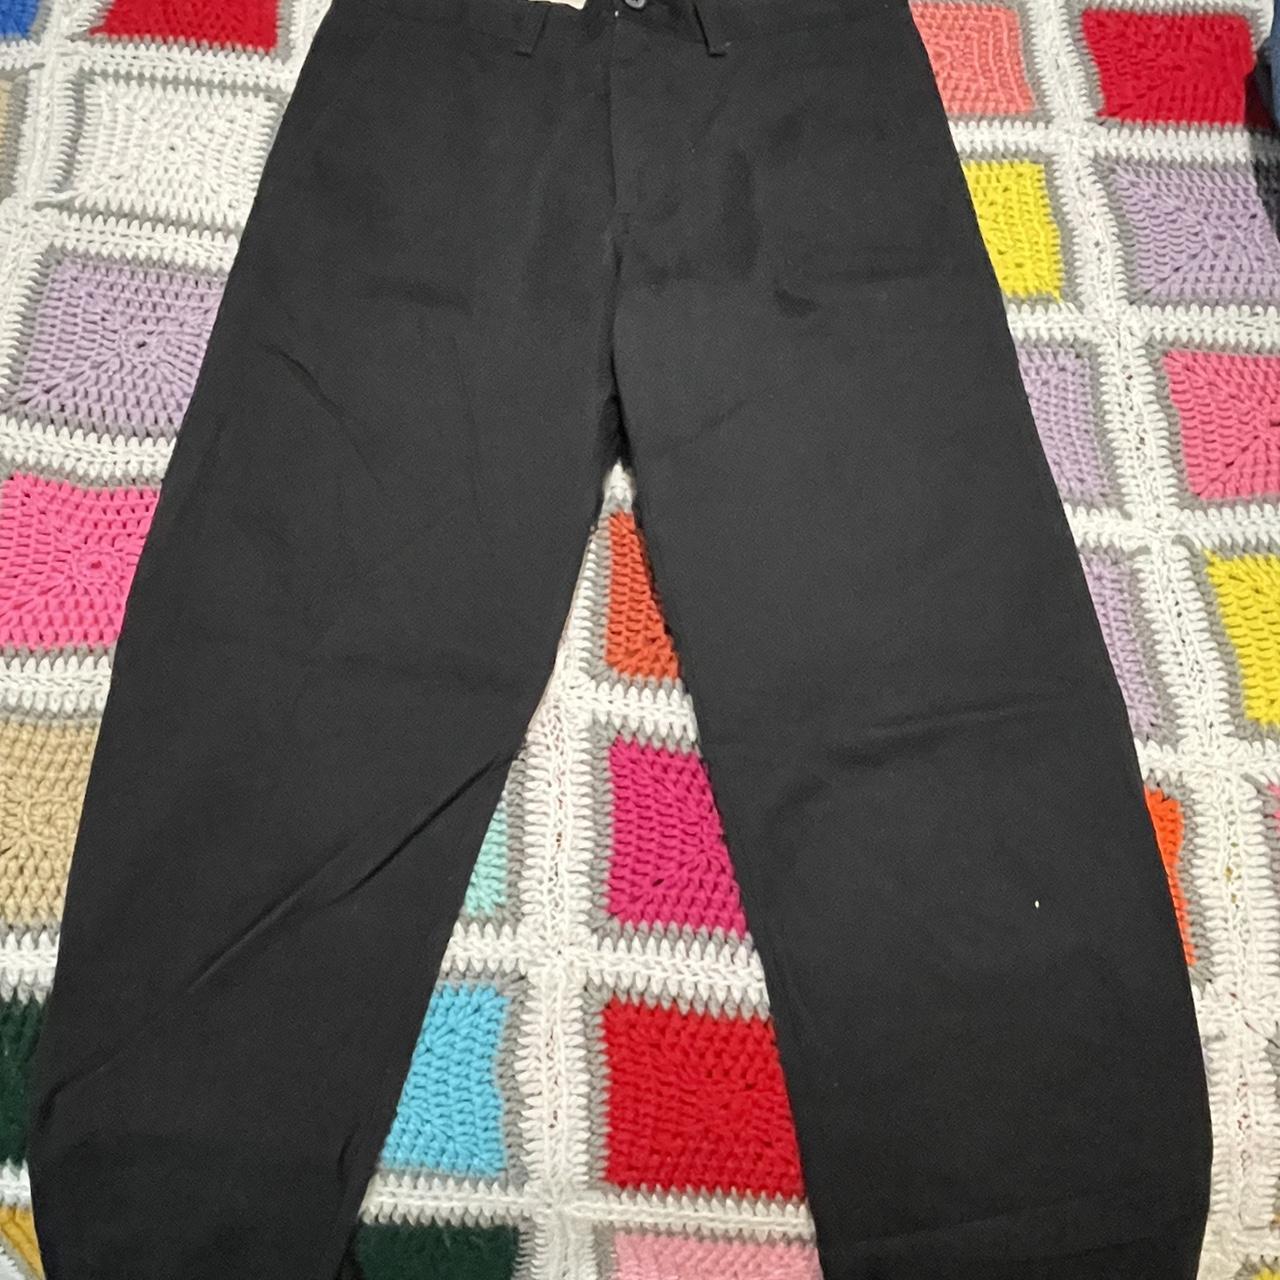 008439. 60 32. DK GREY Retail $ 80.00 Cotton Casual Pants by HAGGAR  COMPANY. PREM NOIRON KHK PLAIN Whs A: 1